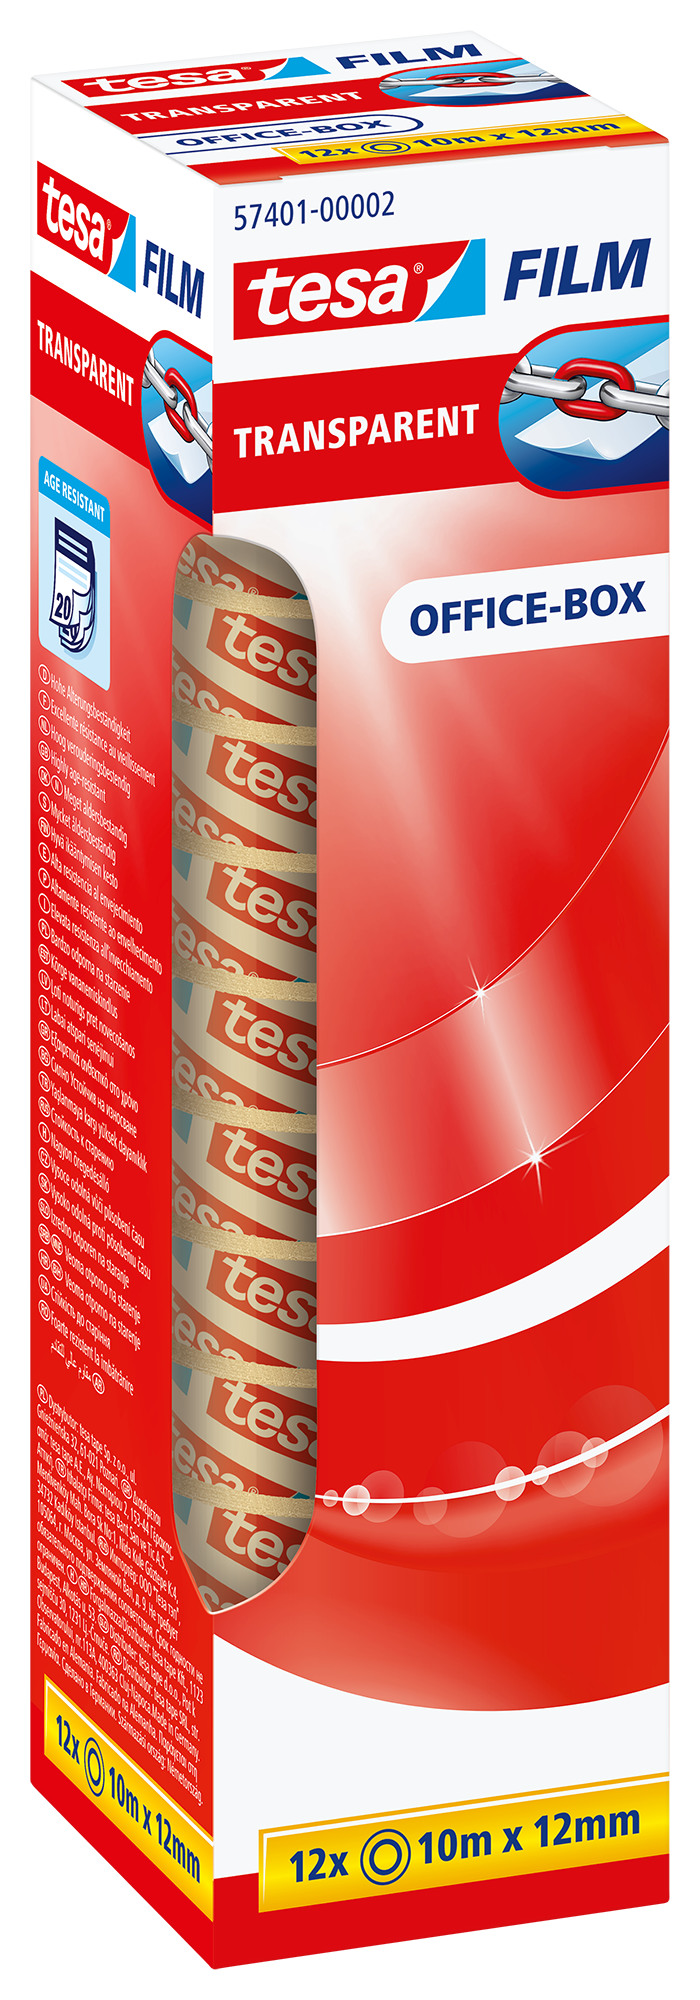 TESA tesafilm transparent 12mmx10m 574010000 10 rl. + 2 rl. in Office-Box